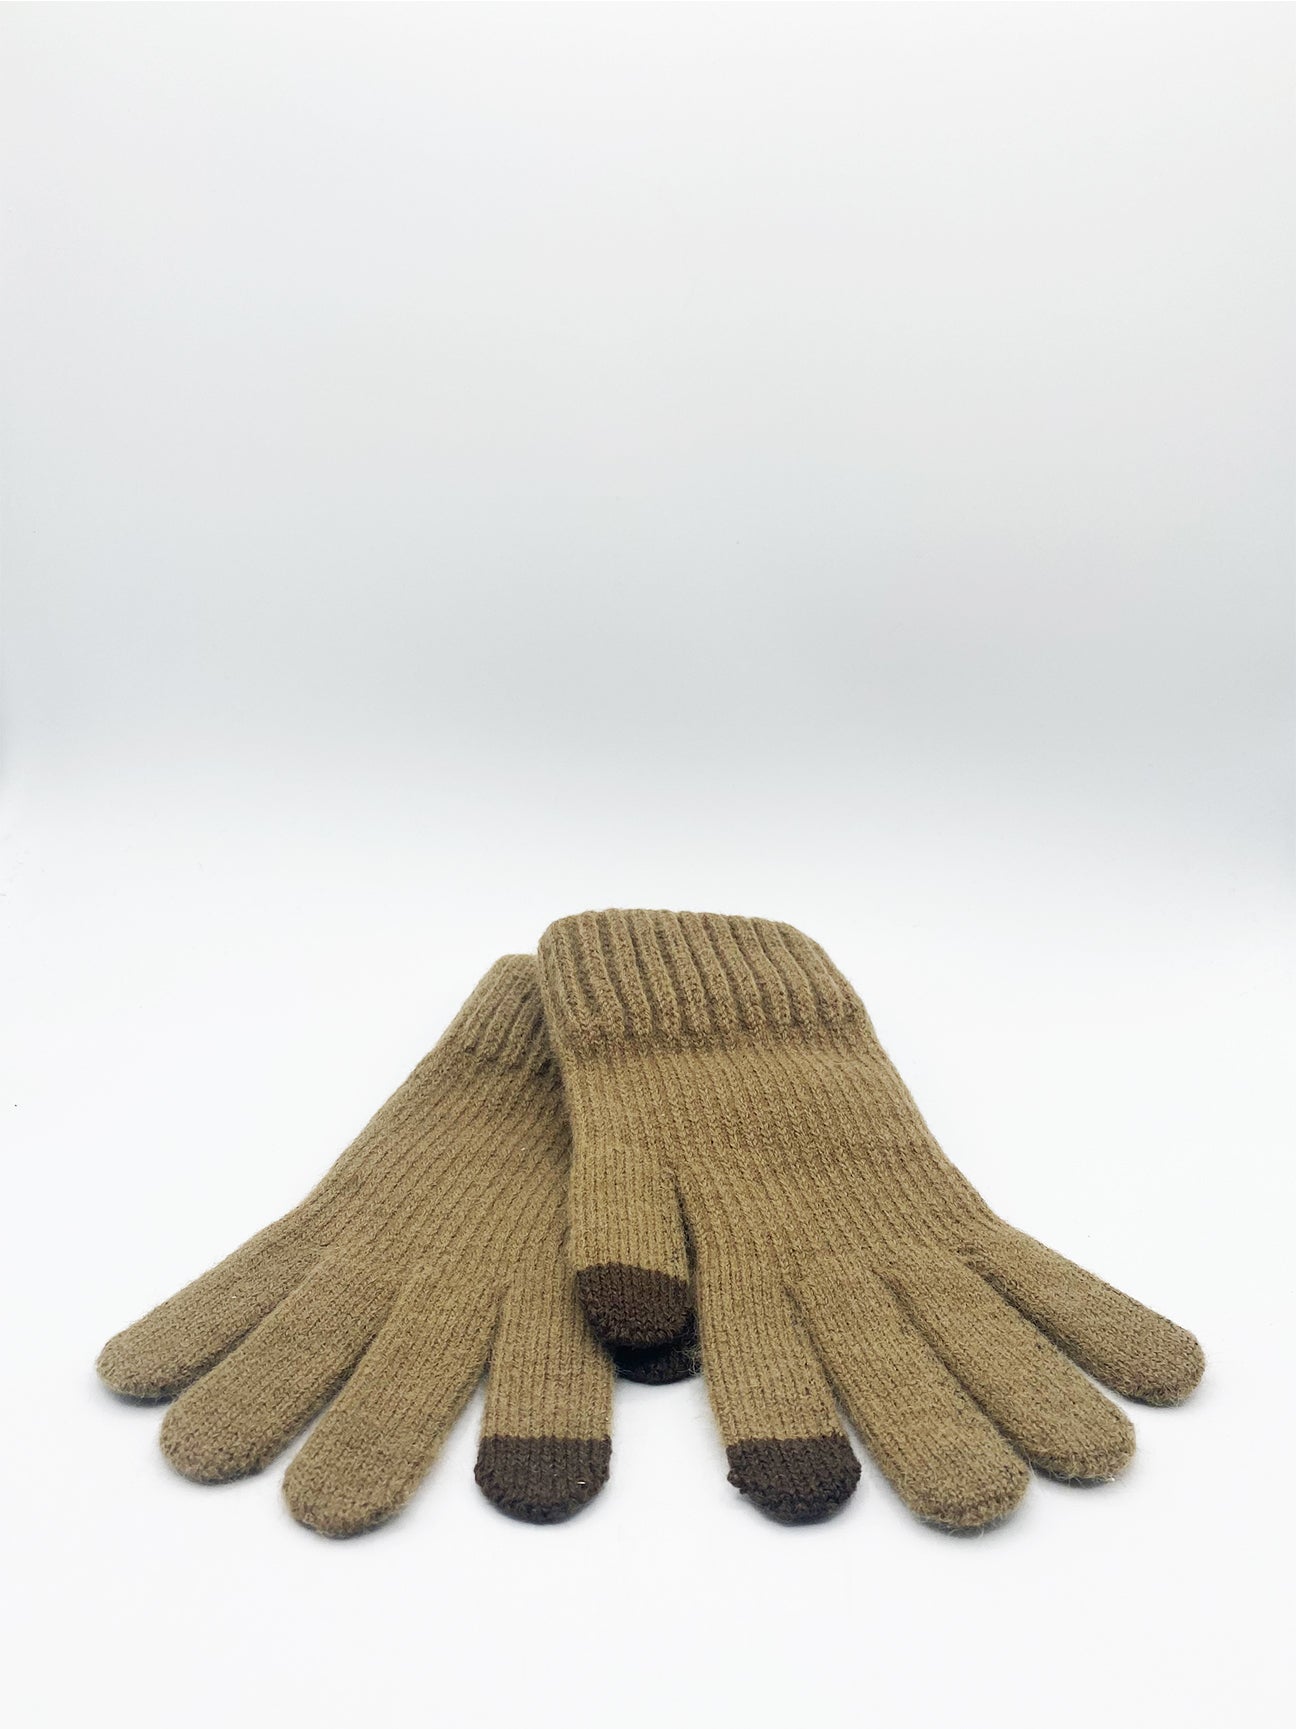 Plain Knitted Gloves in Beige